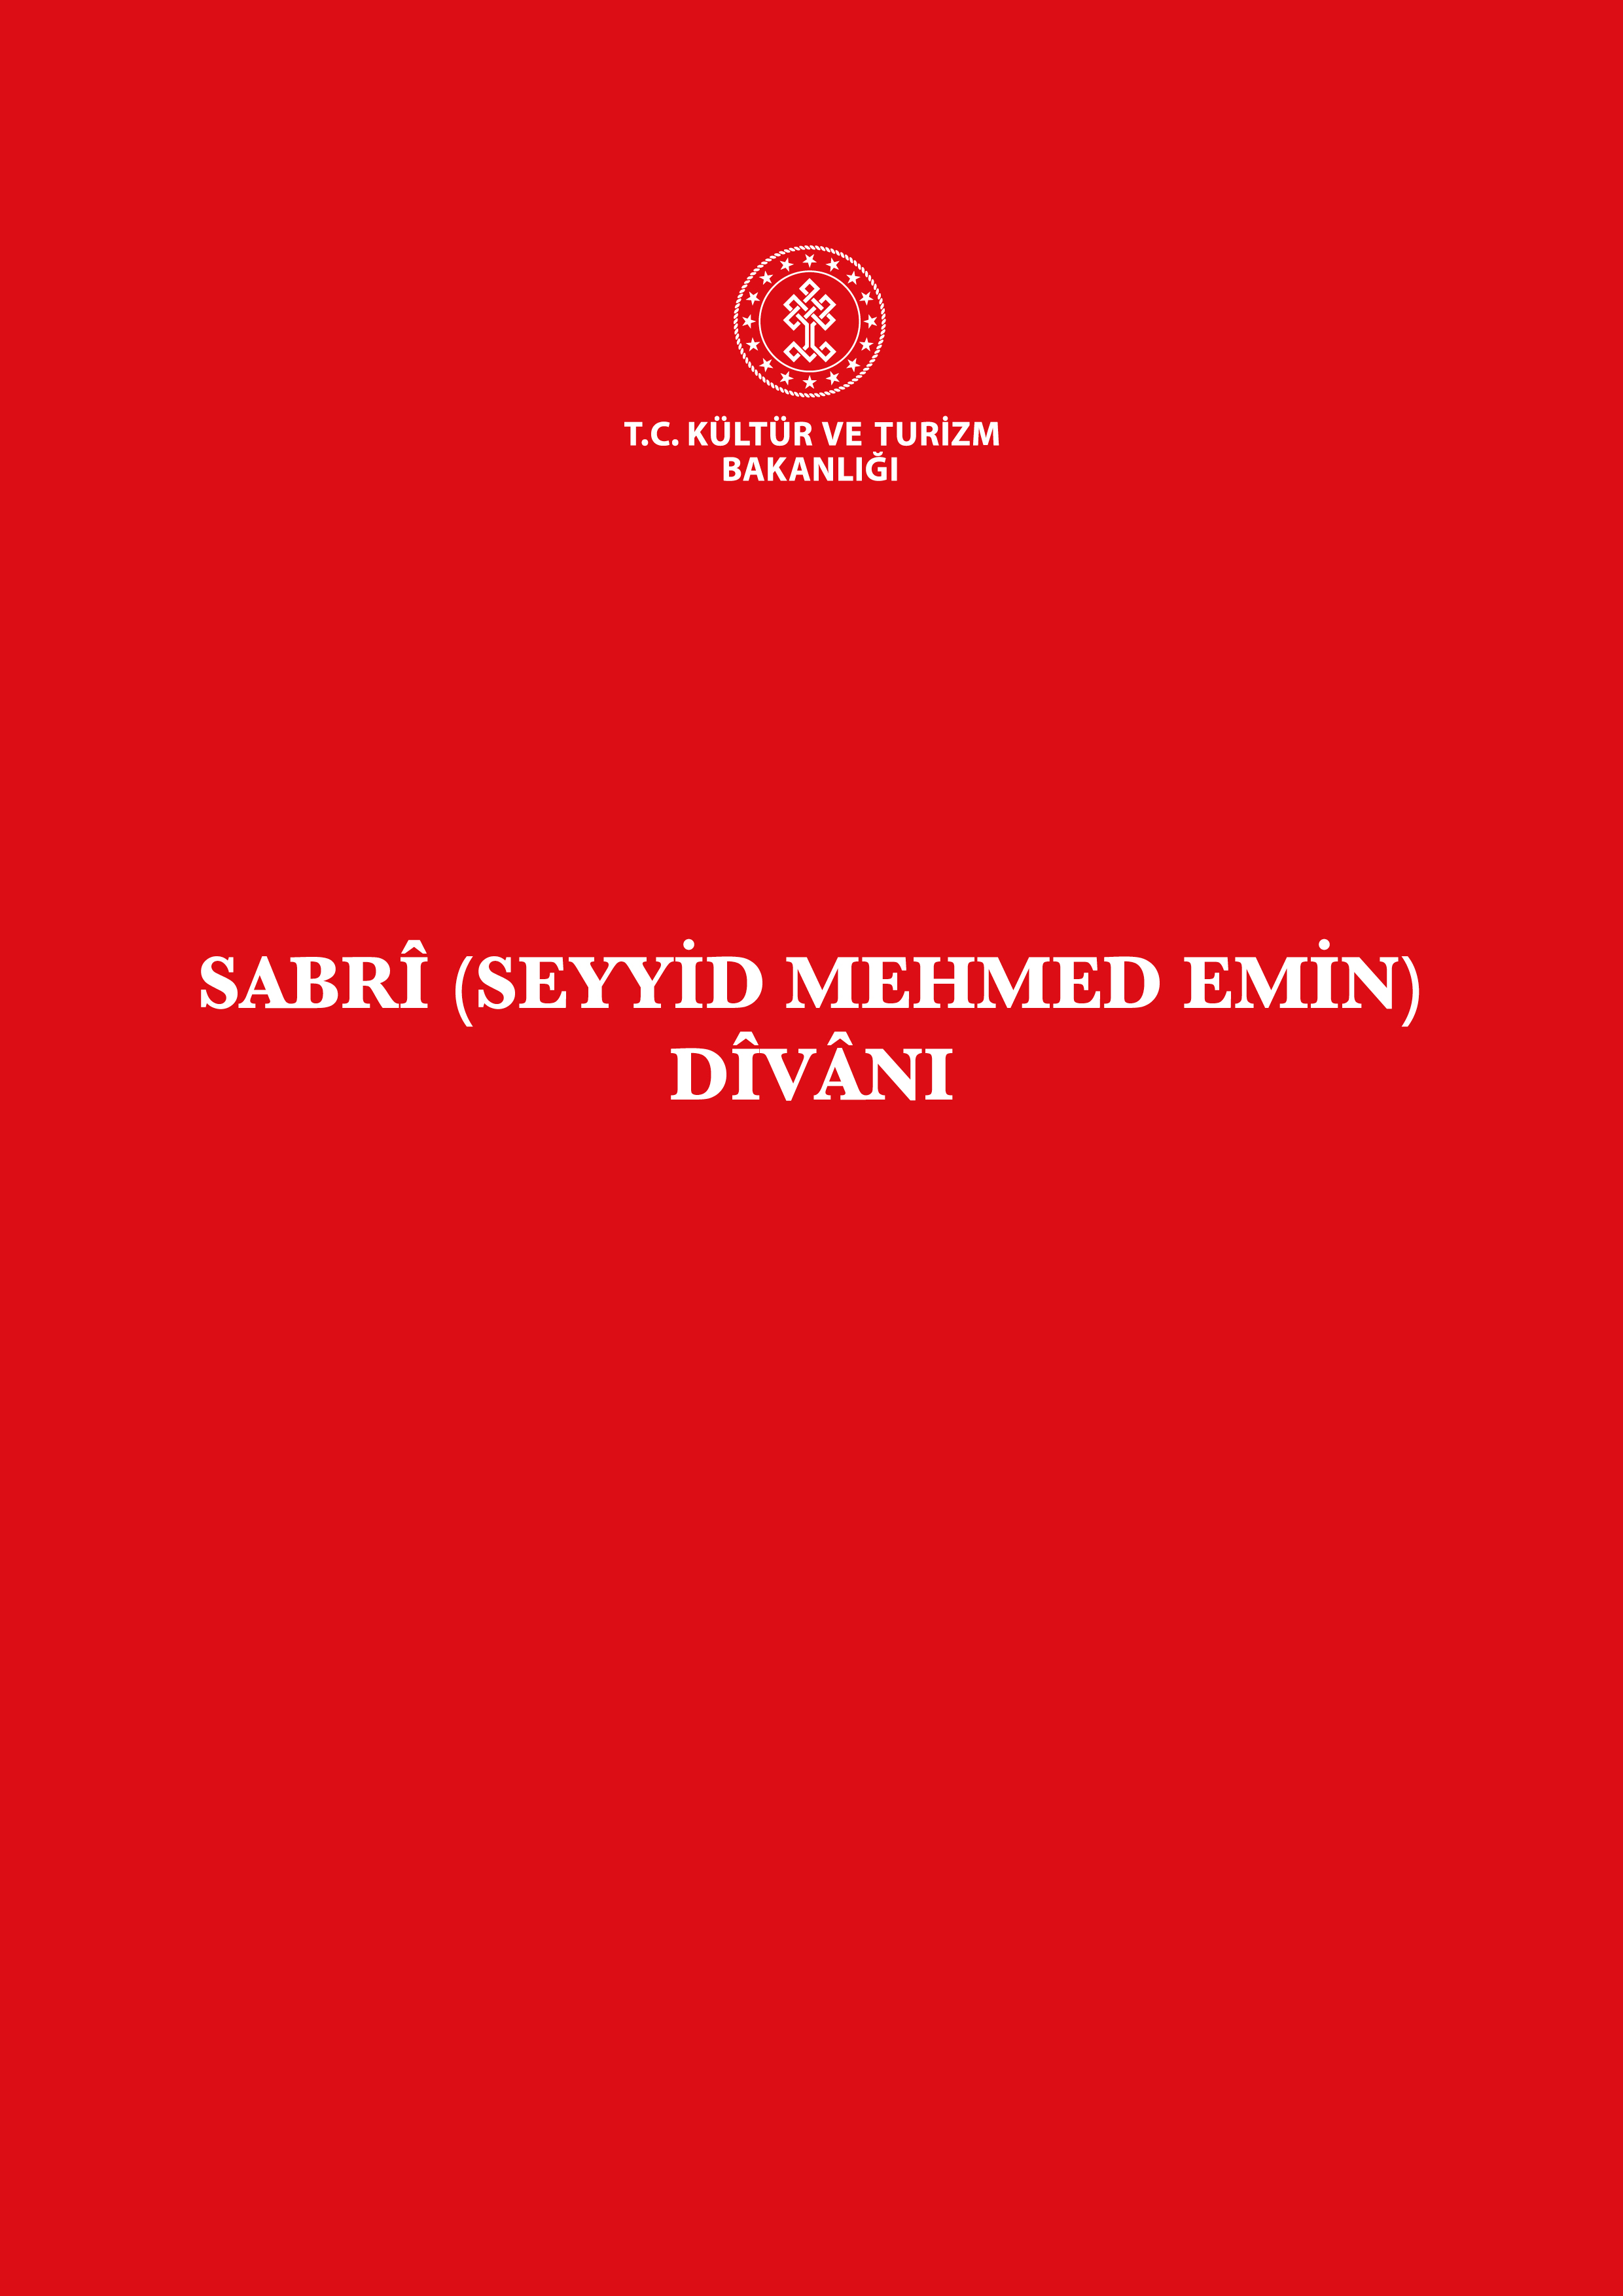 Sabrî (Seyyid Mehmed Emin) Dîvânı